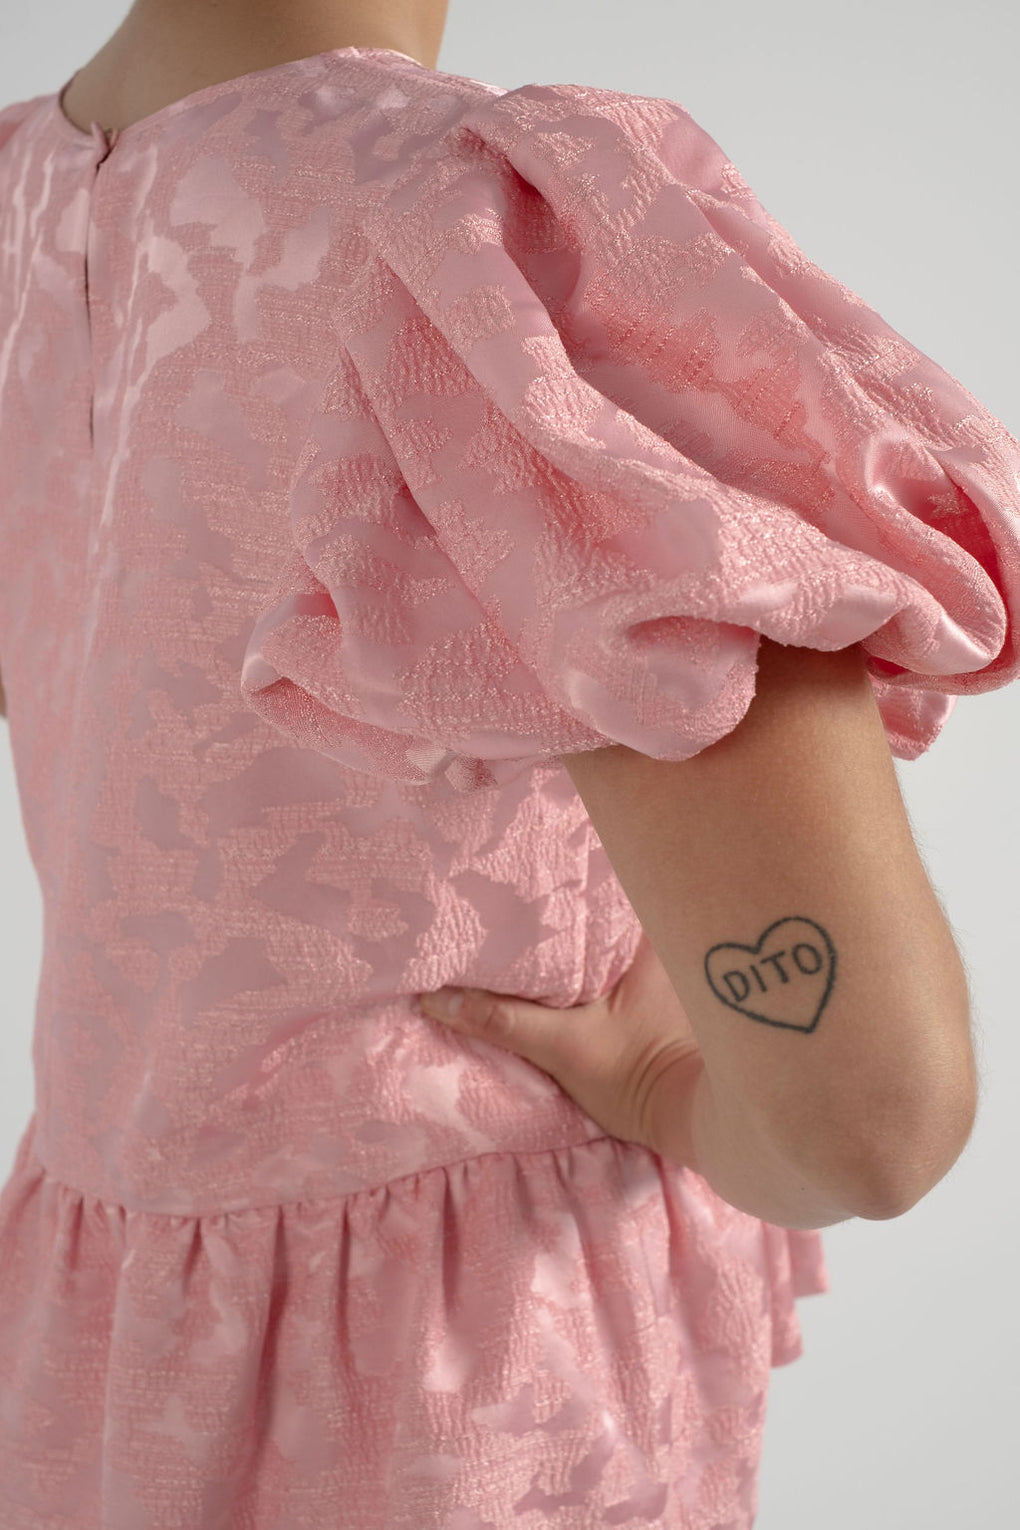 Stine Goya-Miren Top-pink top-puffy sleeve top-Idun-St. Paul